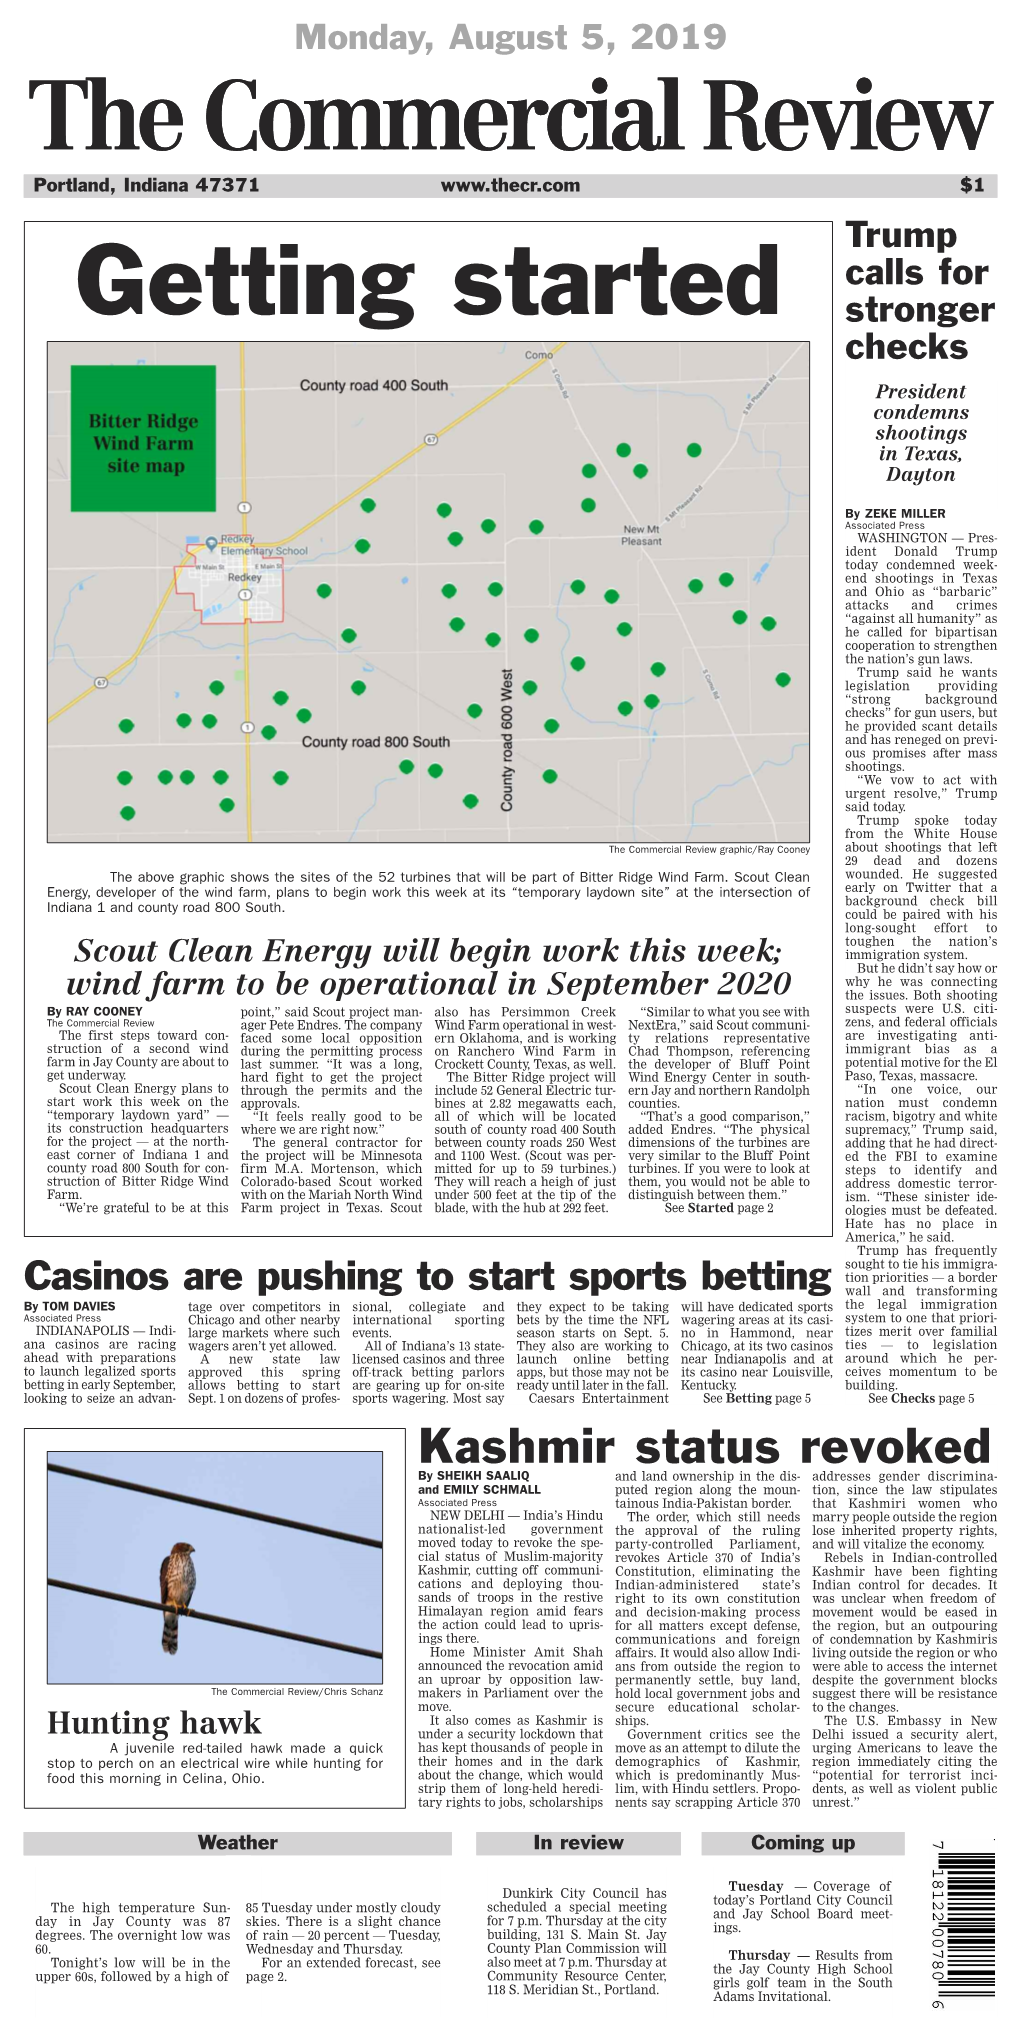 Kashmir Status Revoked